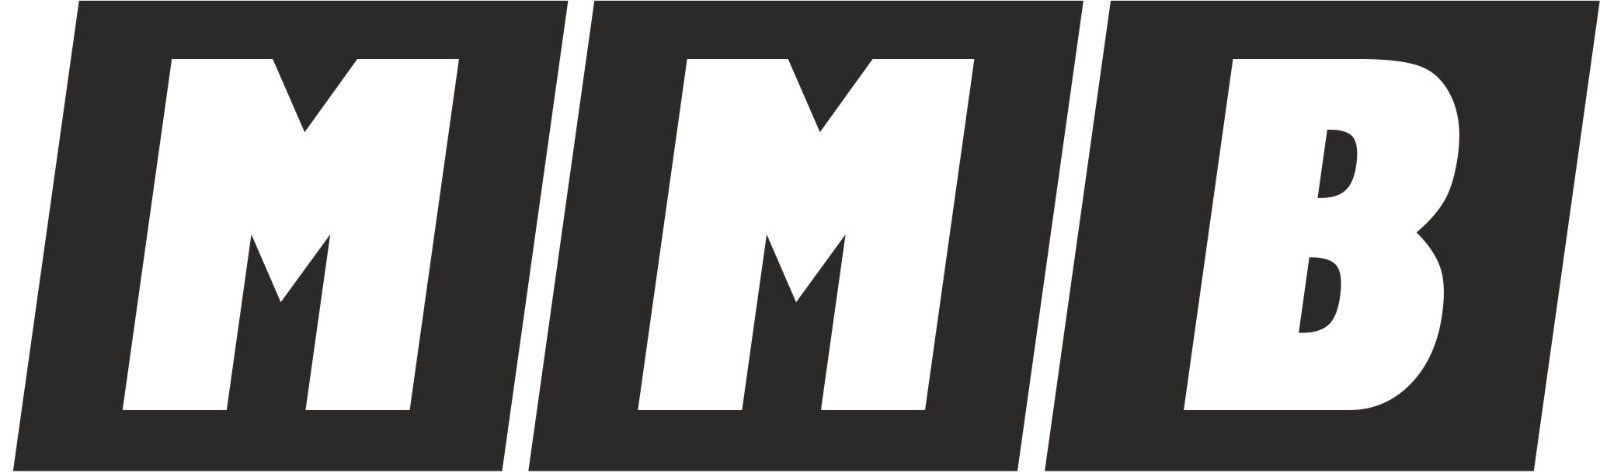 MMB logo witte letters in zwart home